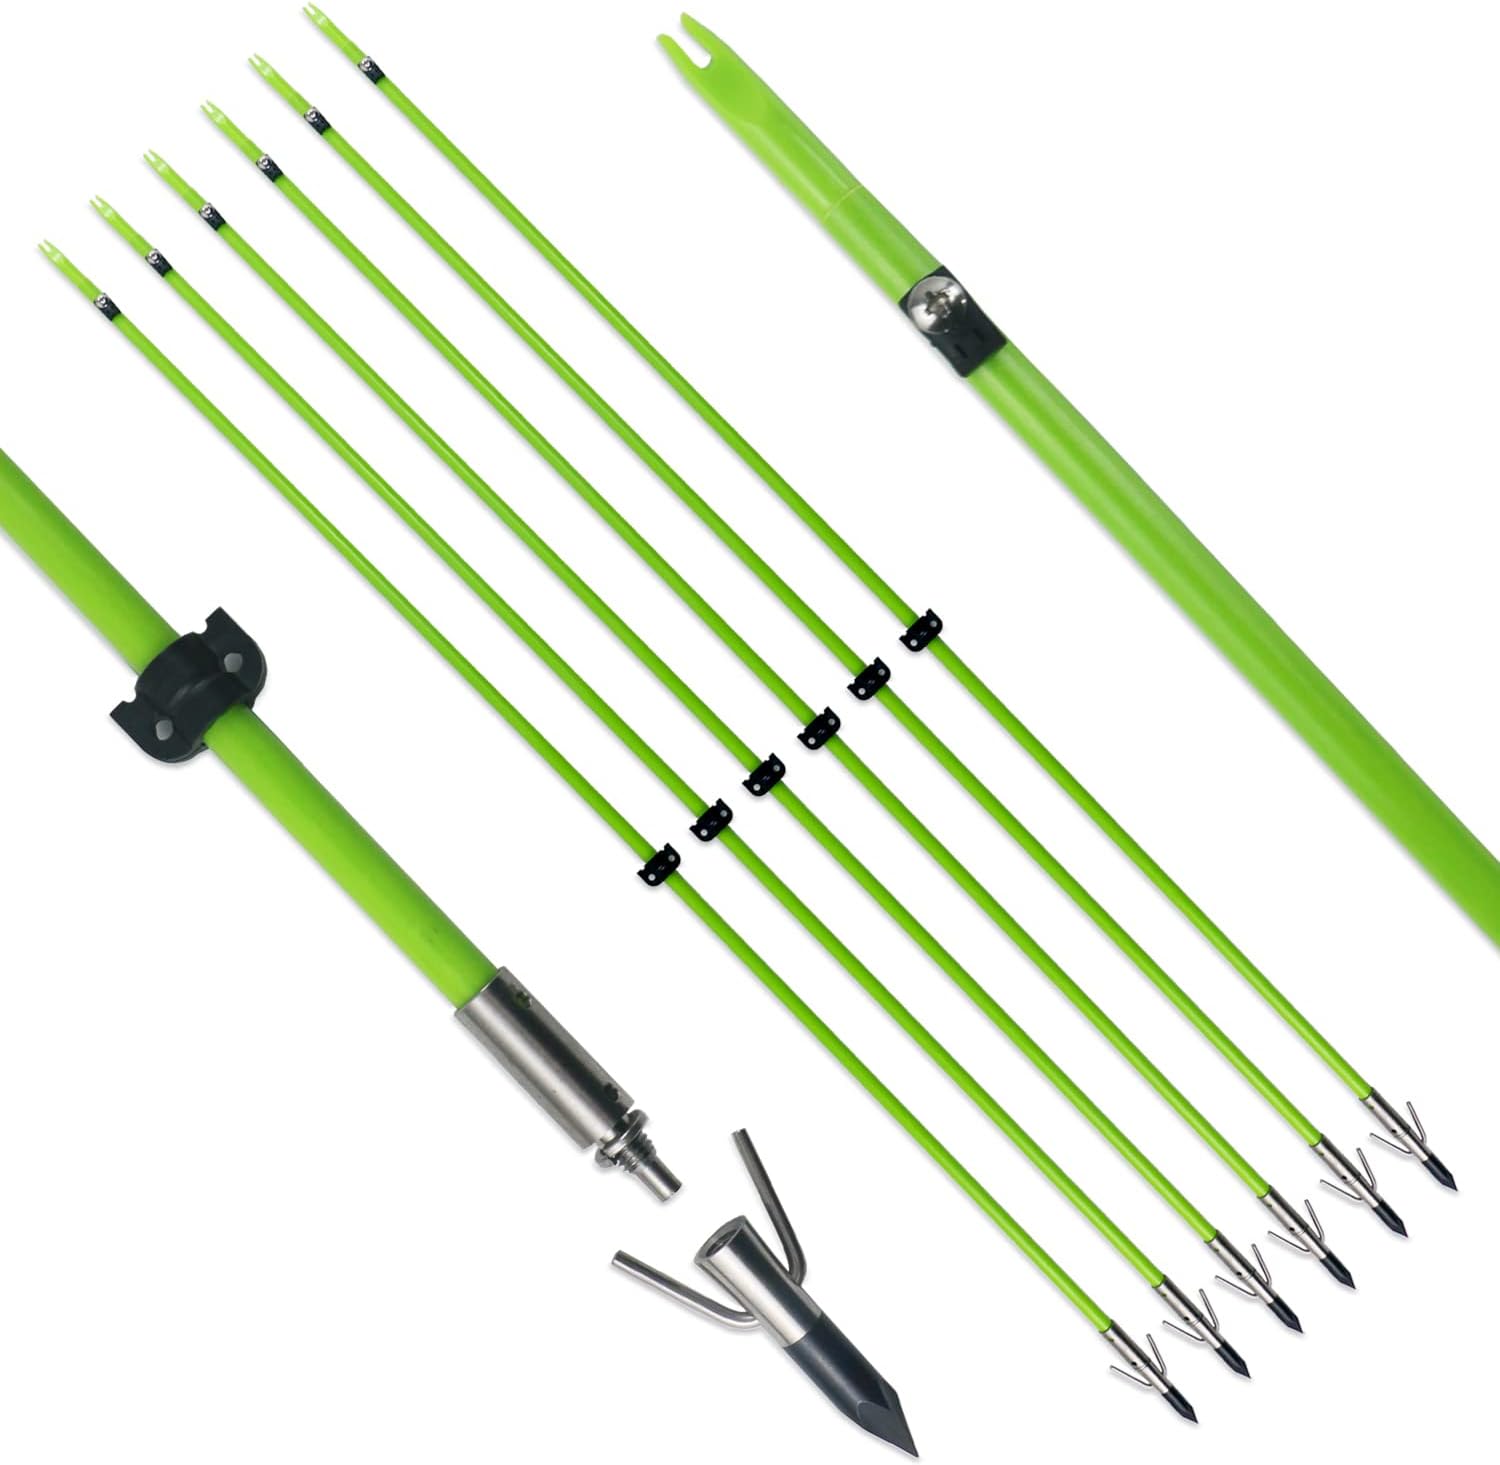 Tiger Archery 34-inch Bowfishing Arrows Solid Fiberglass